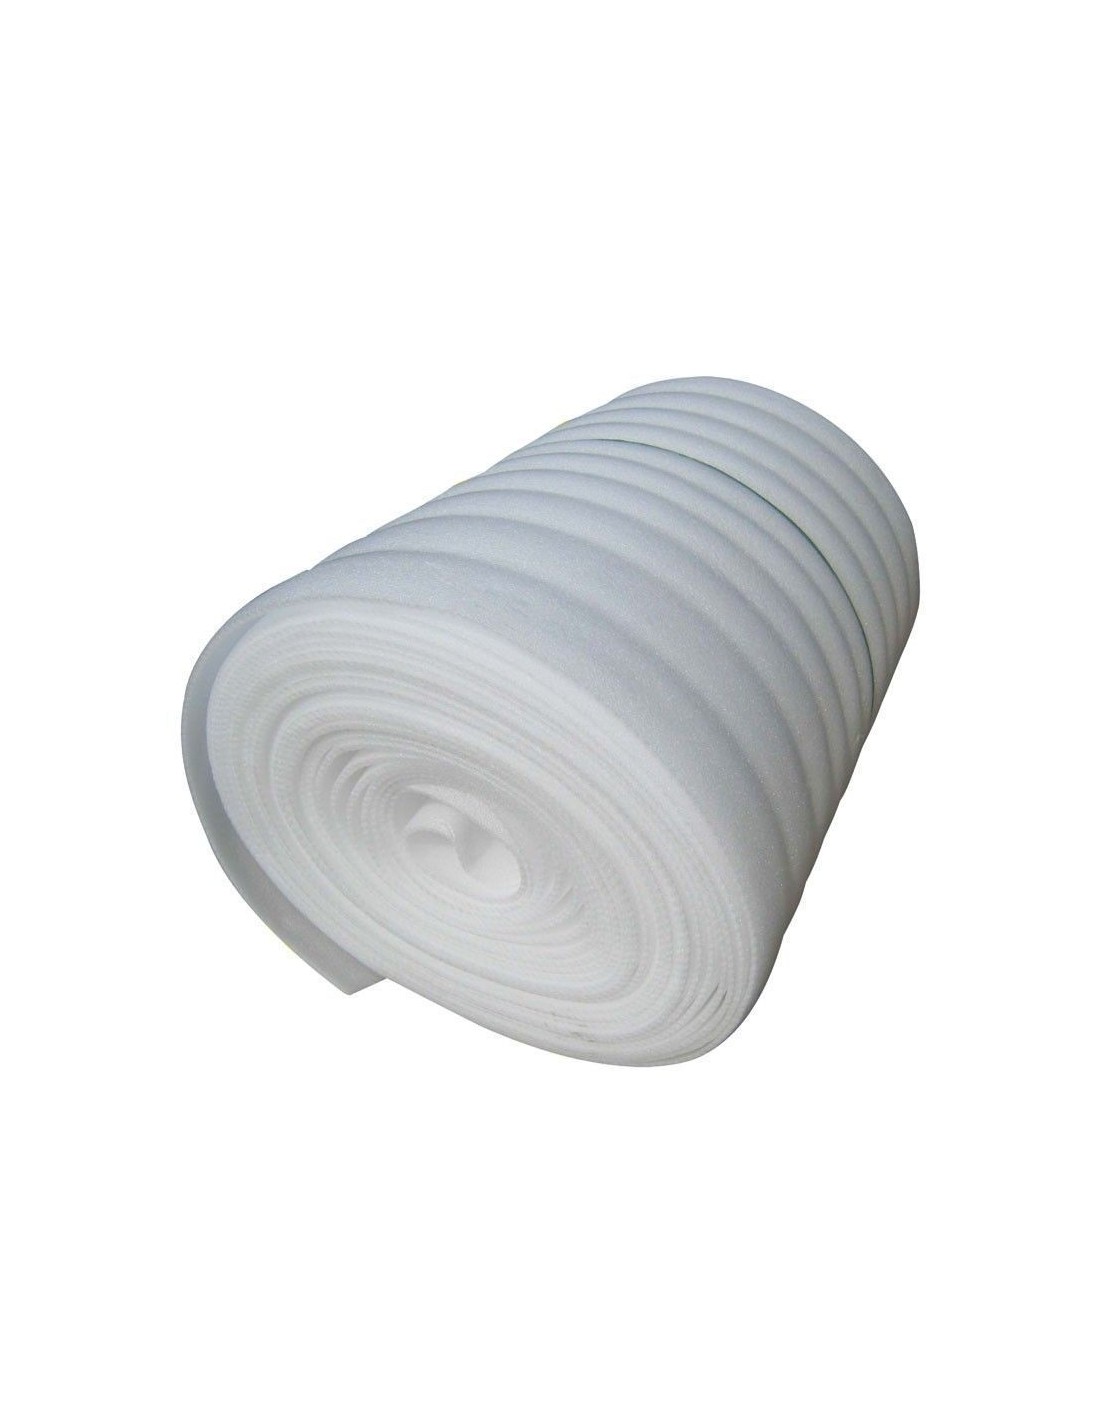 Rollo Foam Espuma polietileno blanca, aislante para suelos, parquet,  embalaje (espesor de 1mm a 10 mm)